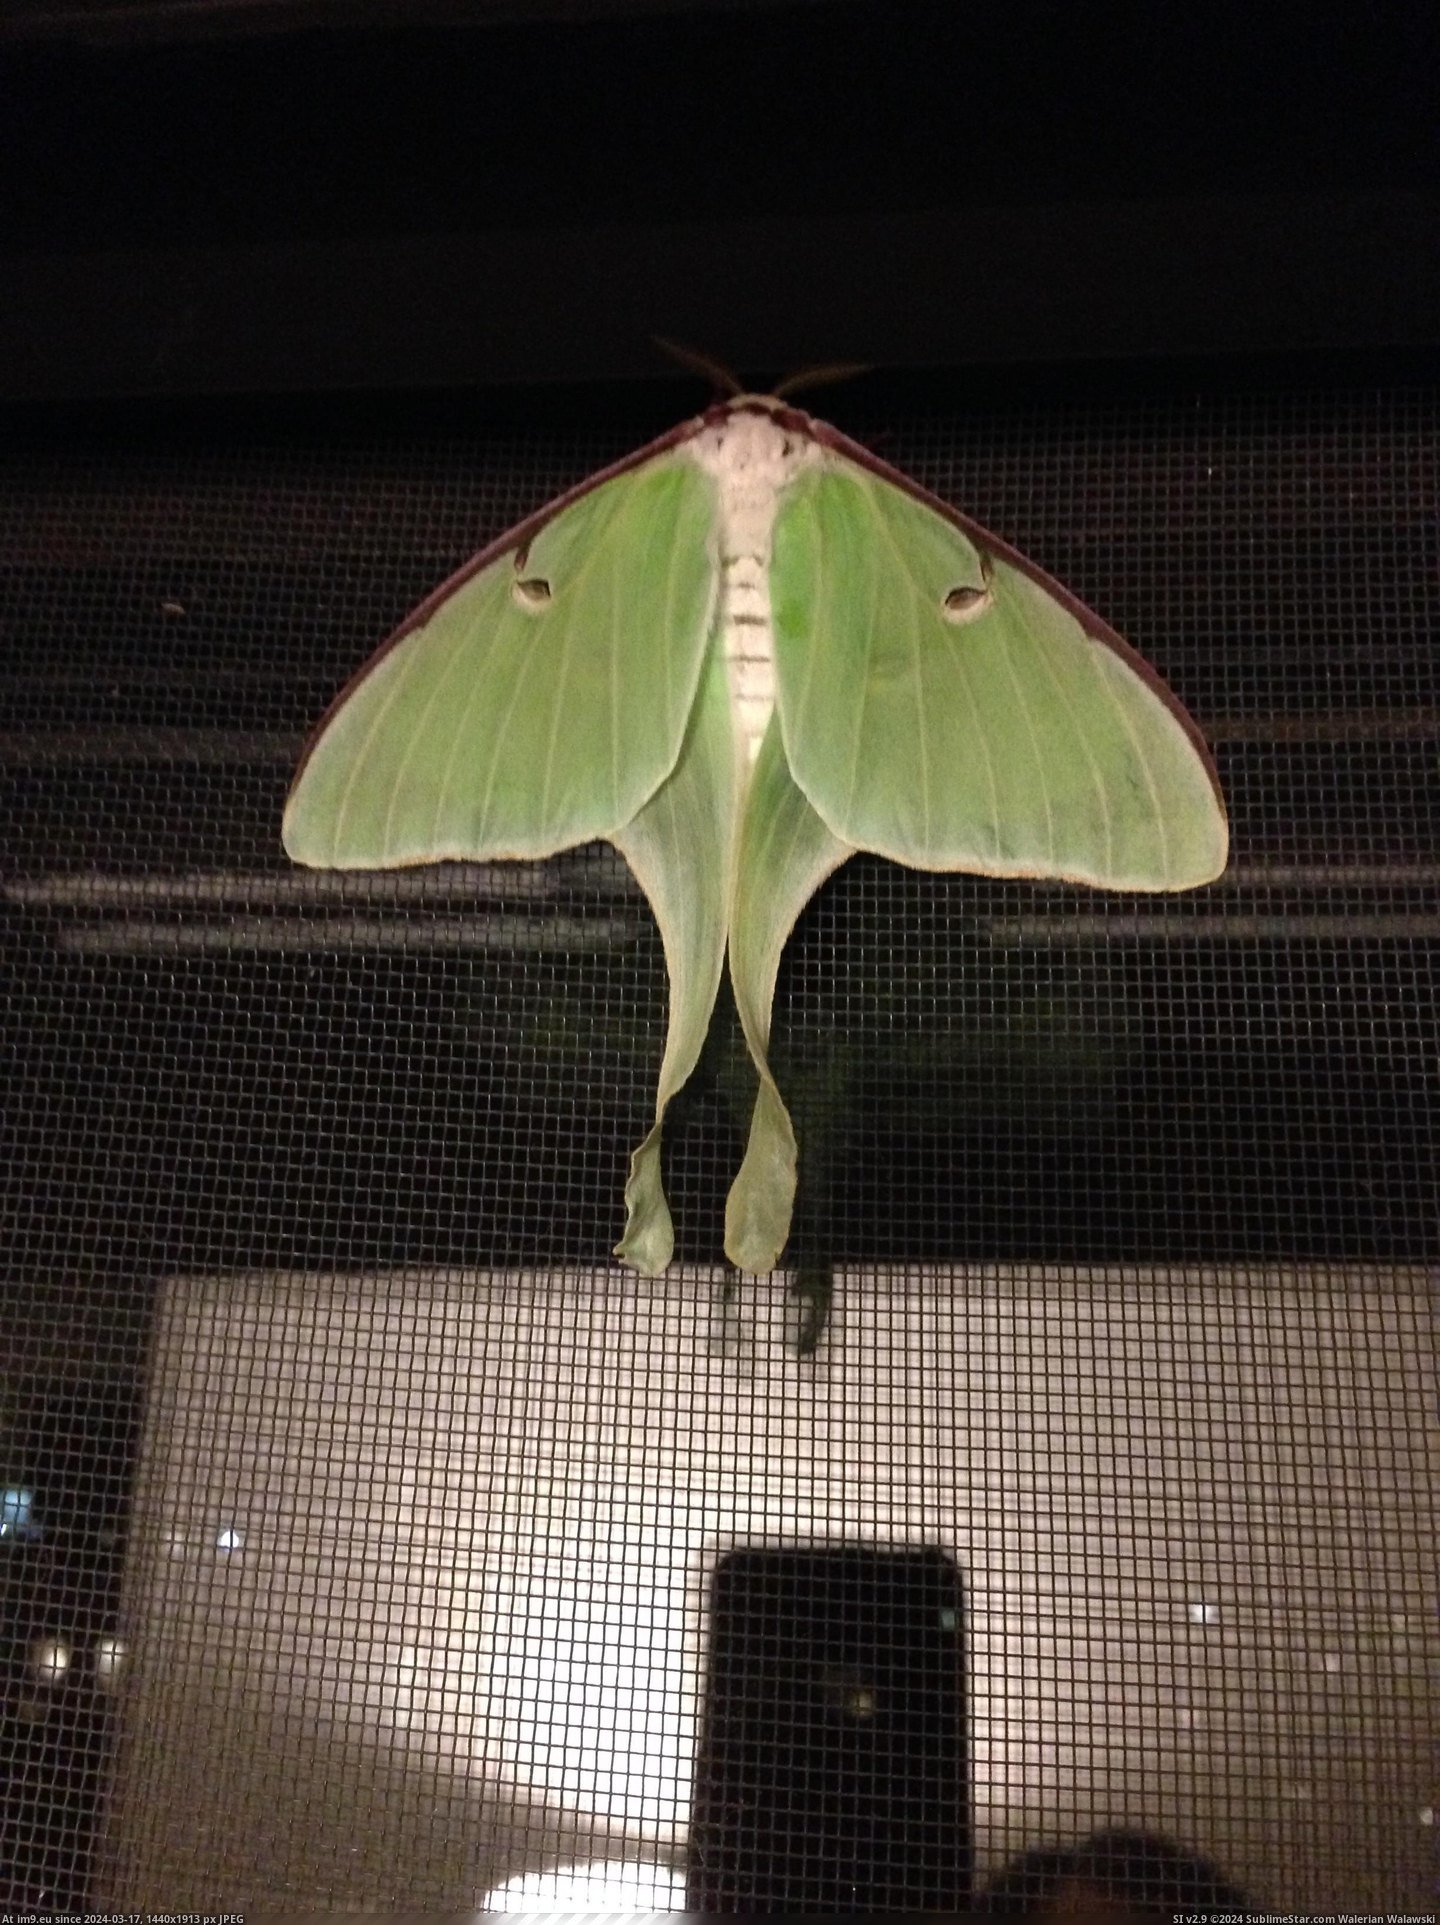 #Was #Room #Fall #Caterpillar #Pupated #Turns #Luna #Moth [Pics] I found a caterpillar last fall, and it pupated in my room. Turns out it was a luna moth! 5 Pic. (Изображение из альбом My r/PICS favs))